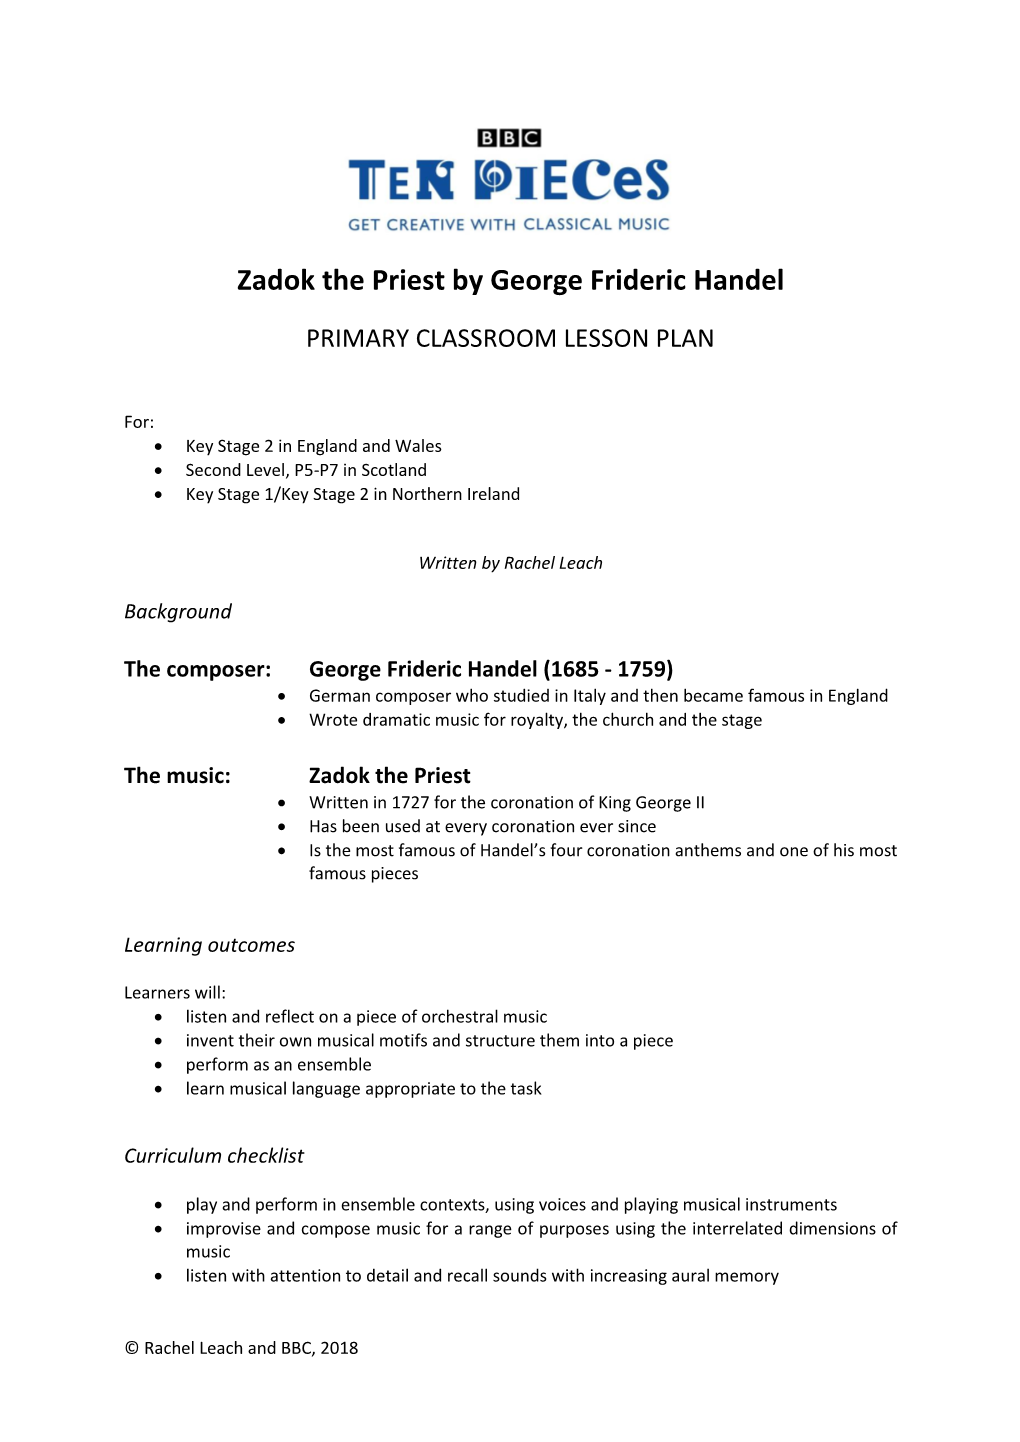 Zadok the Priest by George Frideric Handel